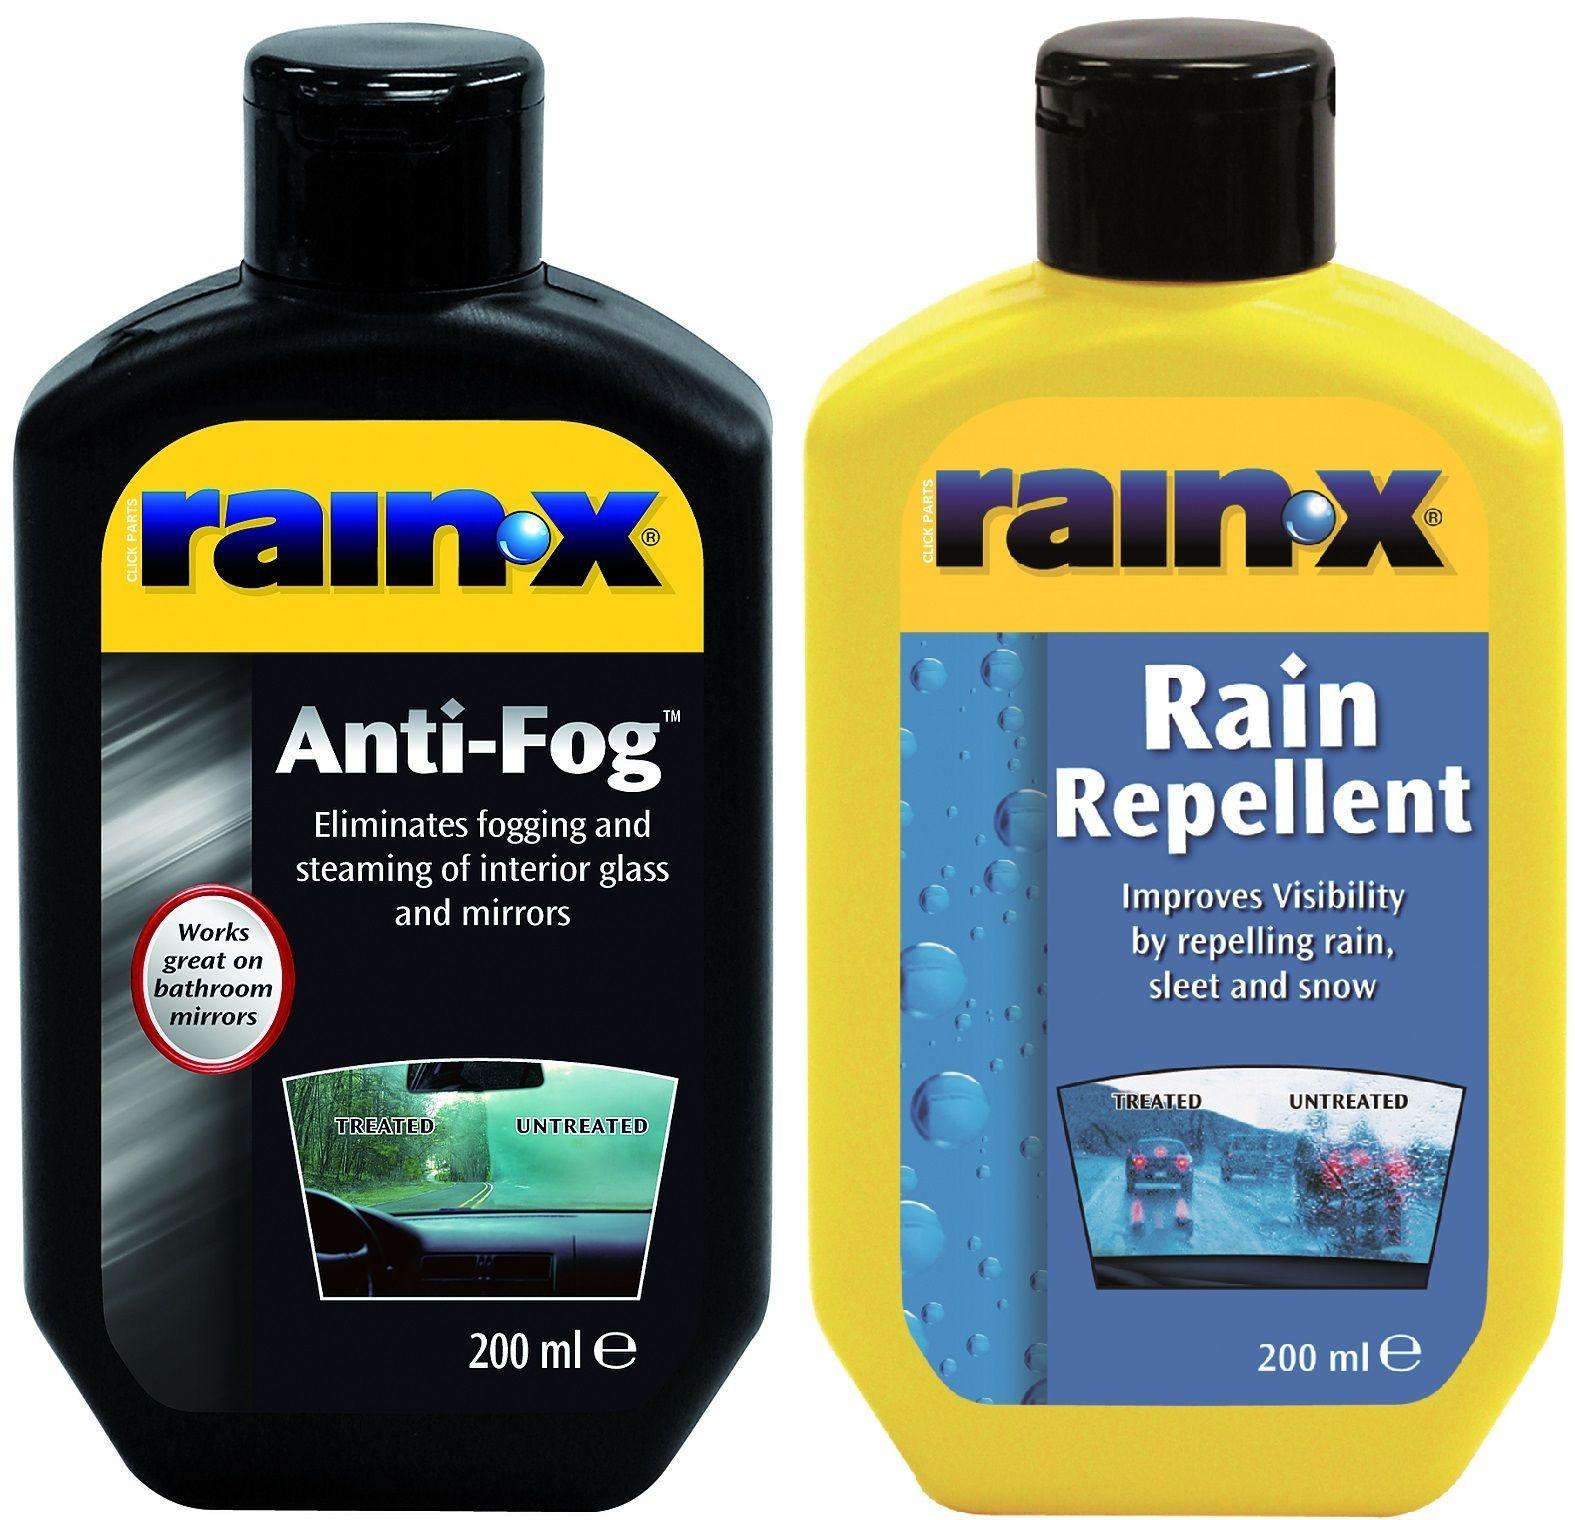 RainX : All About Visibility, Car News